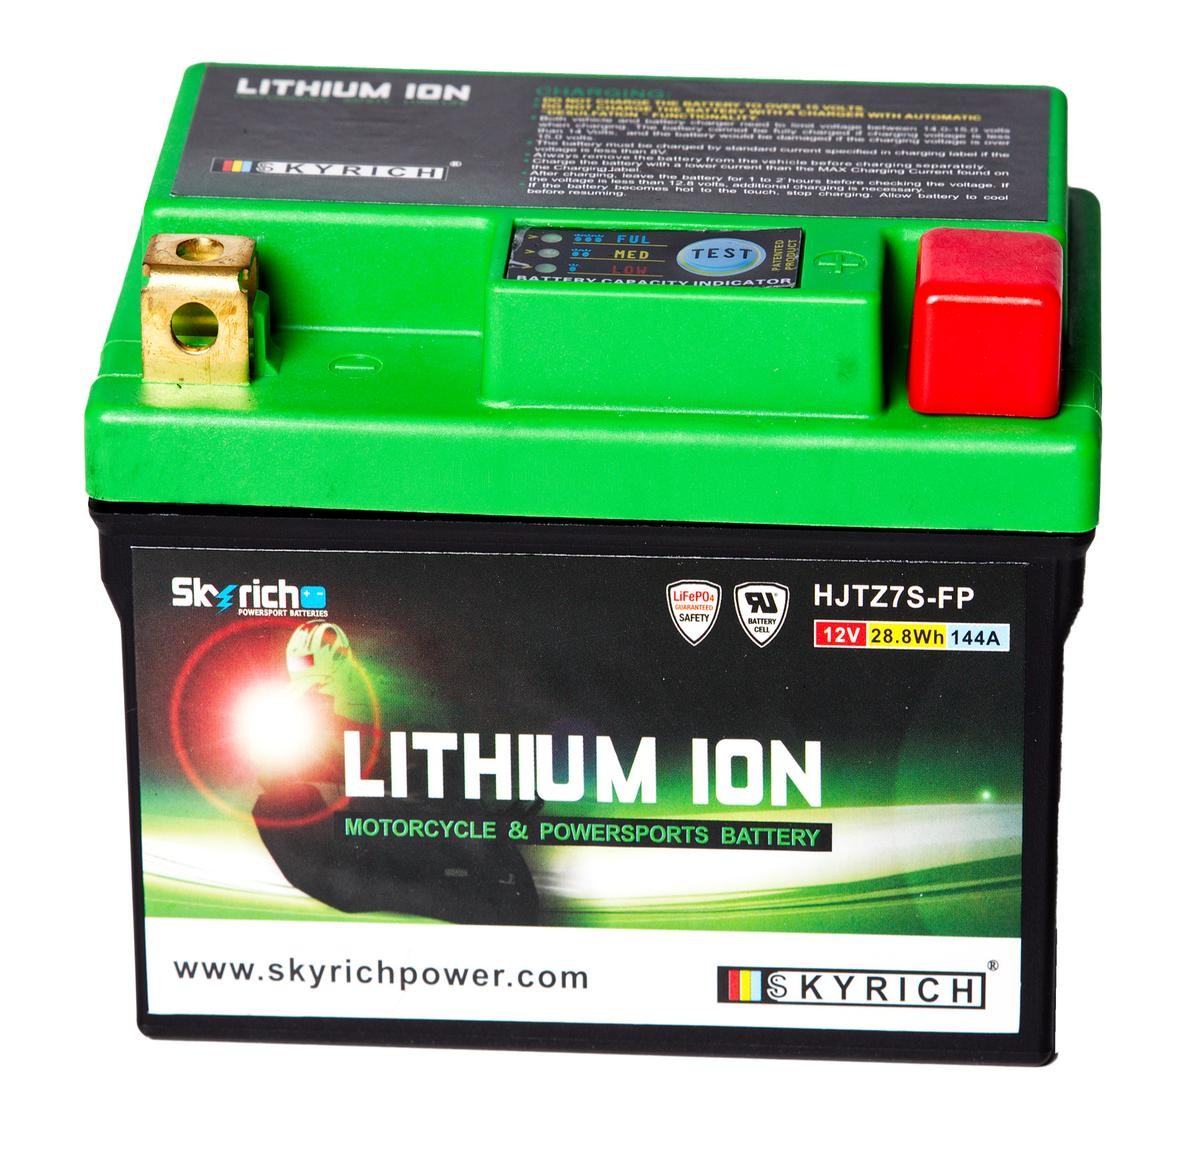 HUSQVARNA TE Batterie 12,8V 2,4Ah 144A N Li-Ionen-Batterie SKYRICH LITHIUM ION HJTZ7S-FP